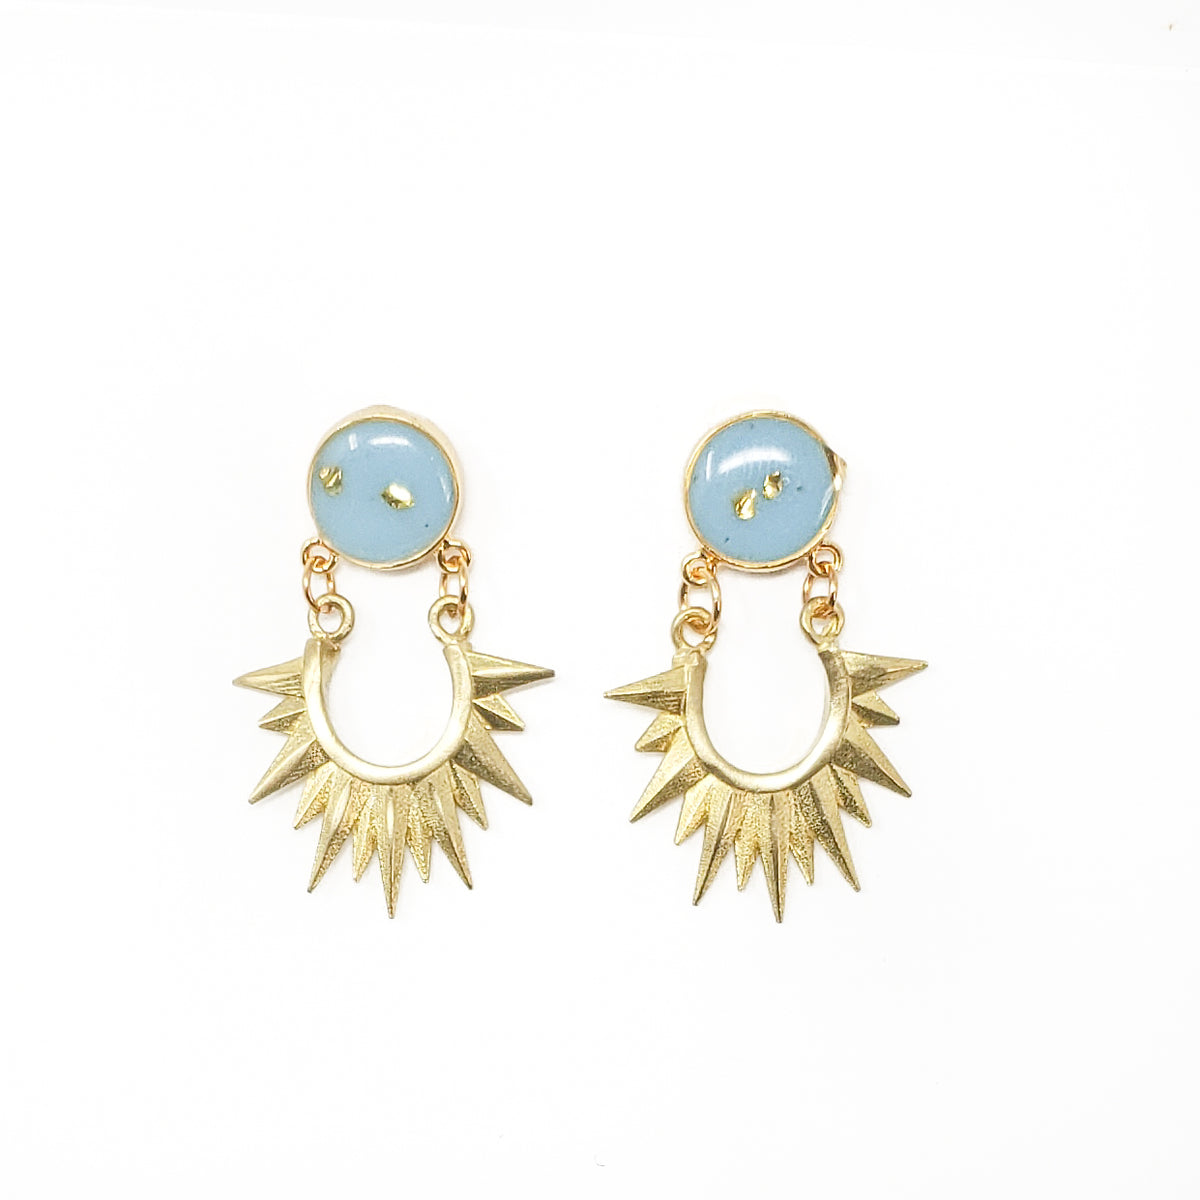 Daniela Brass and Resin Earrings - Turquoise